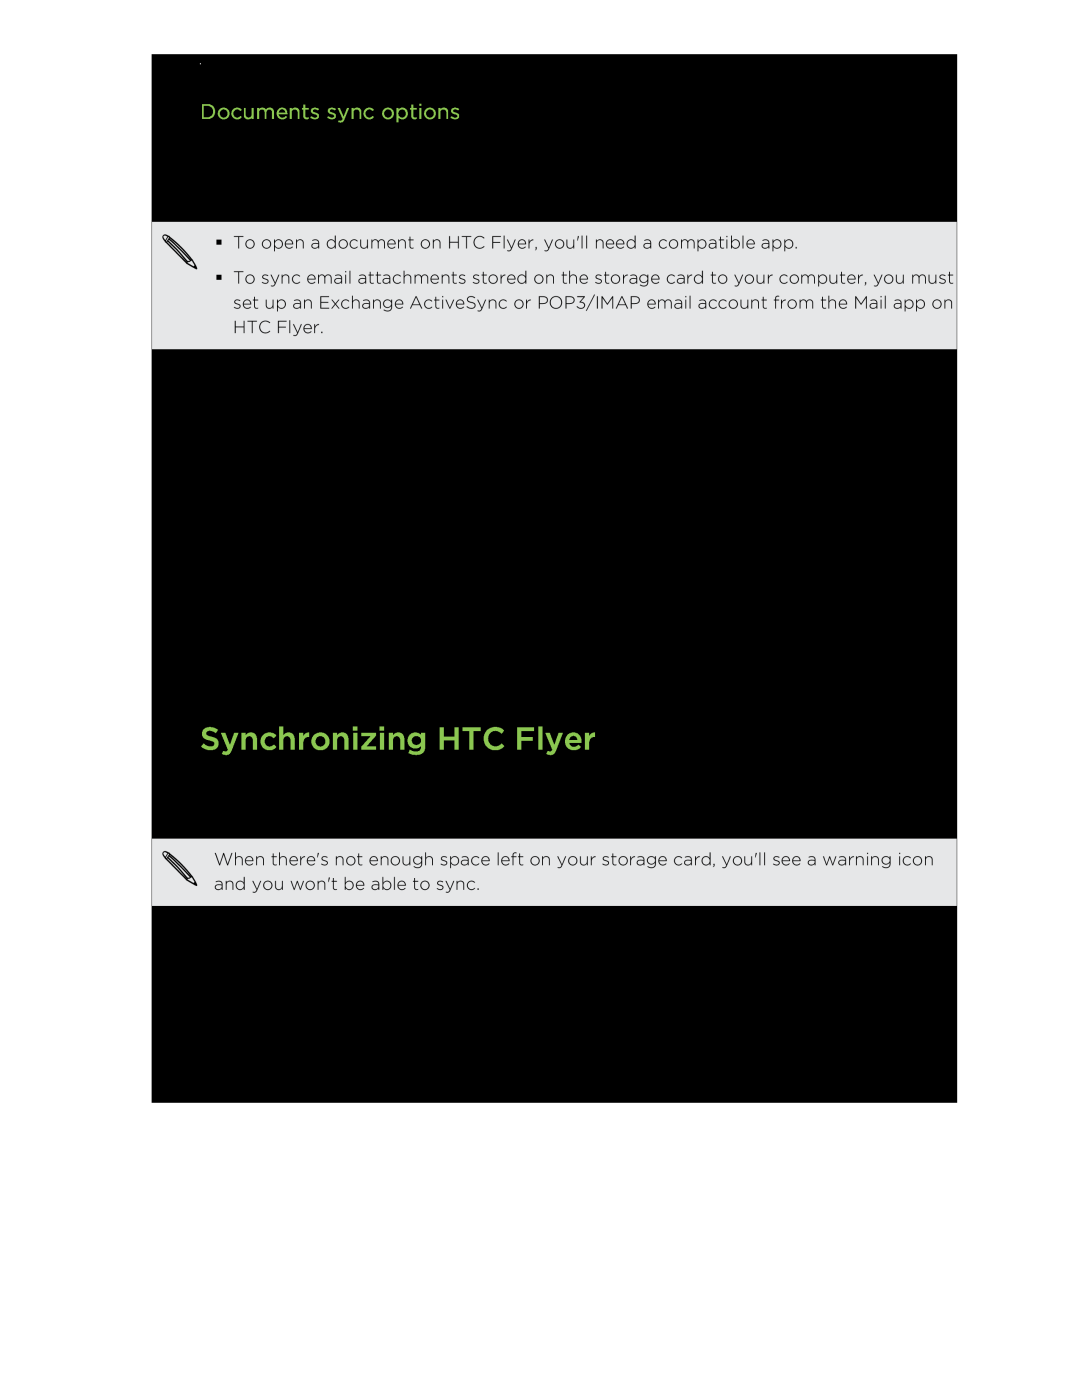 HTC HTCFlyerP512 manual Synchronizing HTC Flyer, Documents sync options 